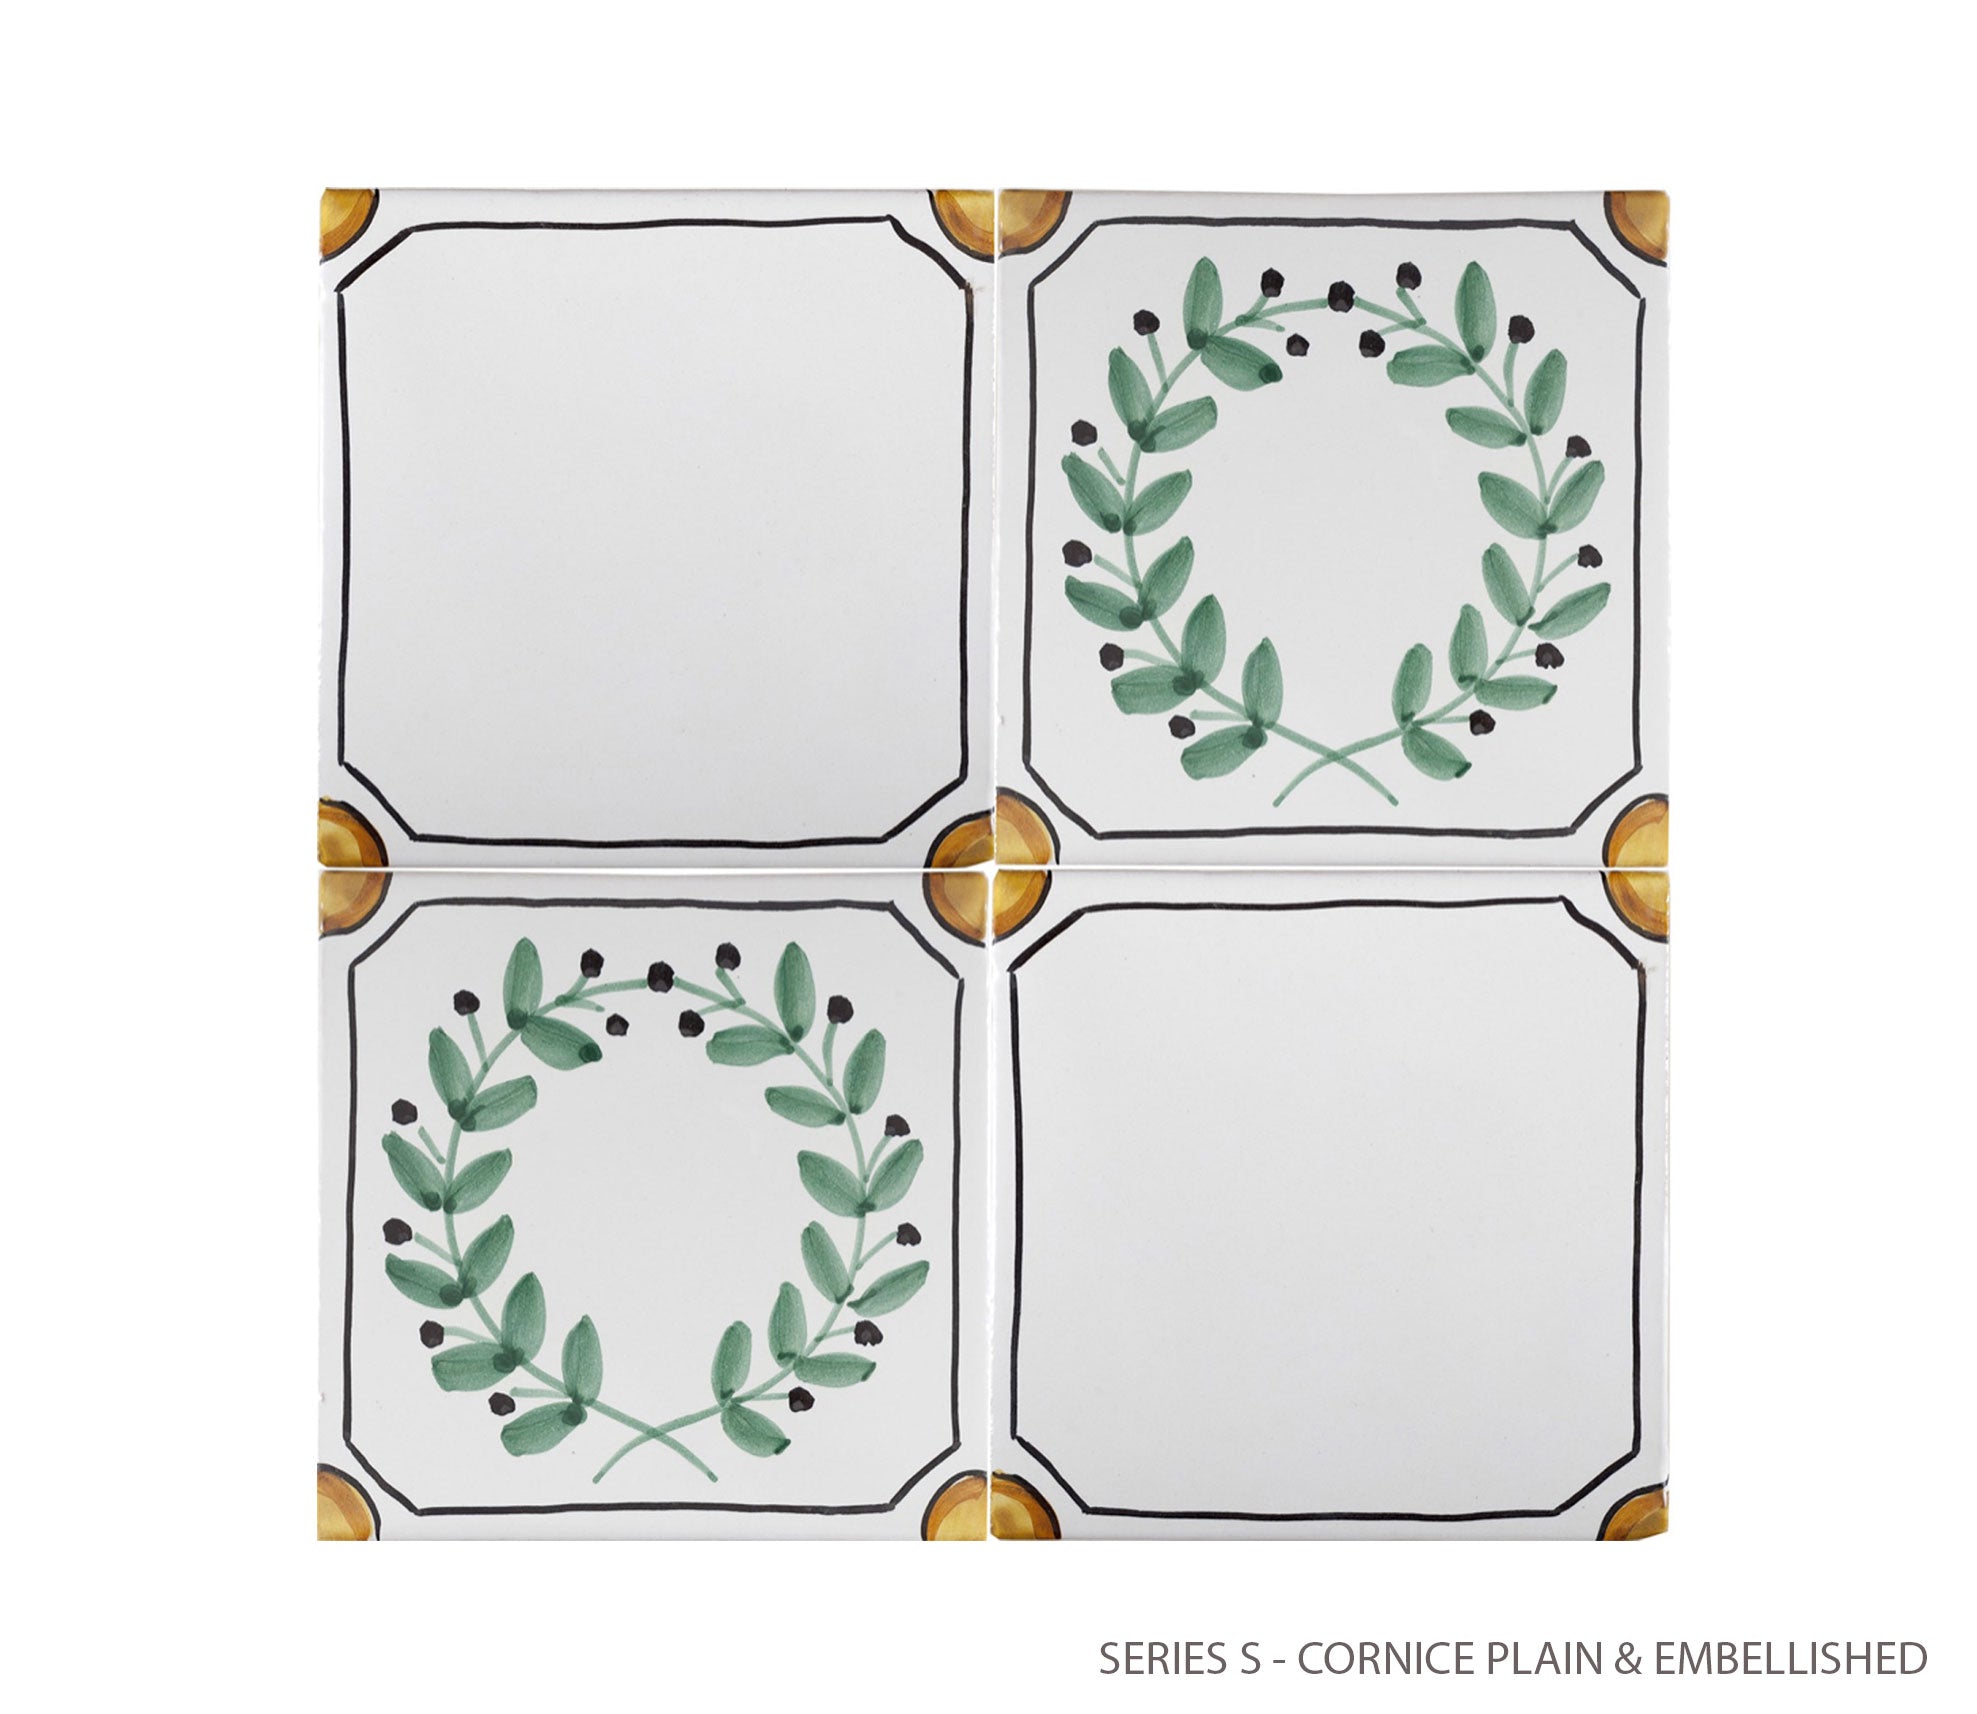 Series S Italian Handpainted Tiles Product Image 28